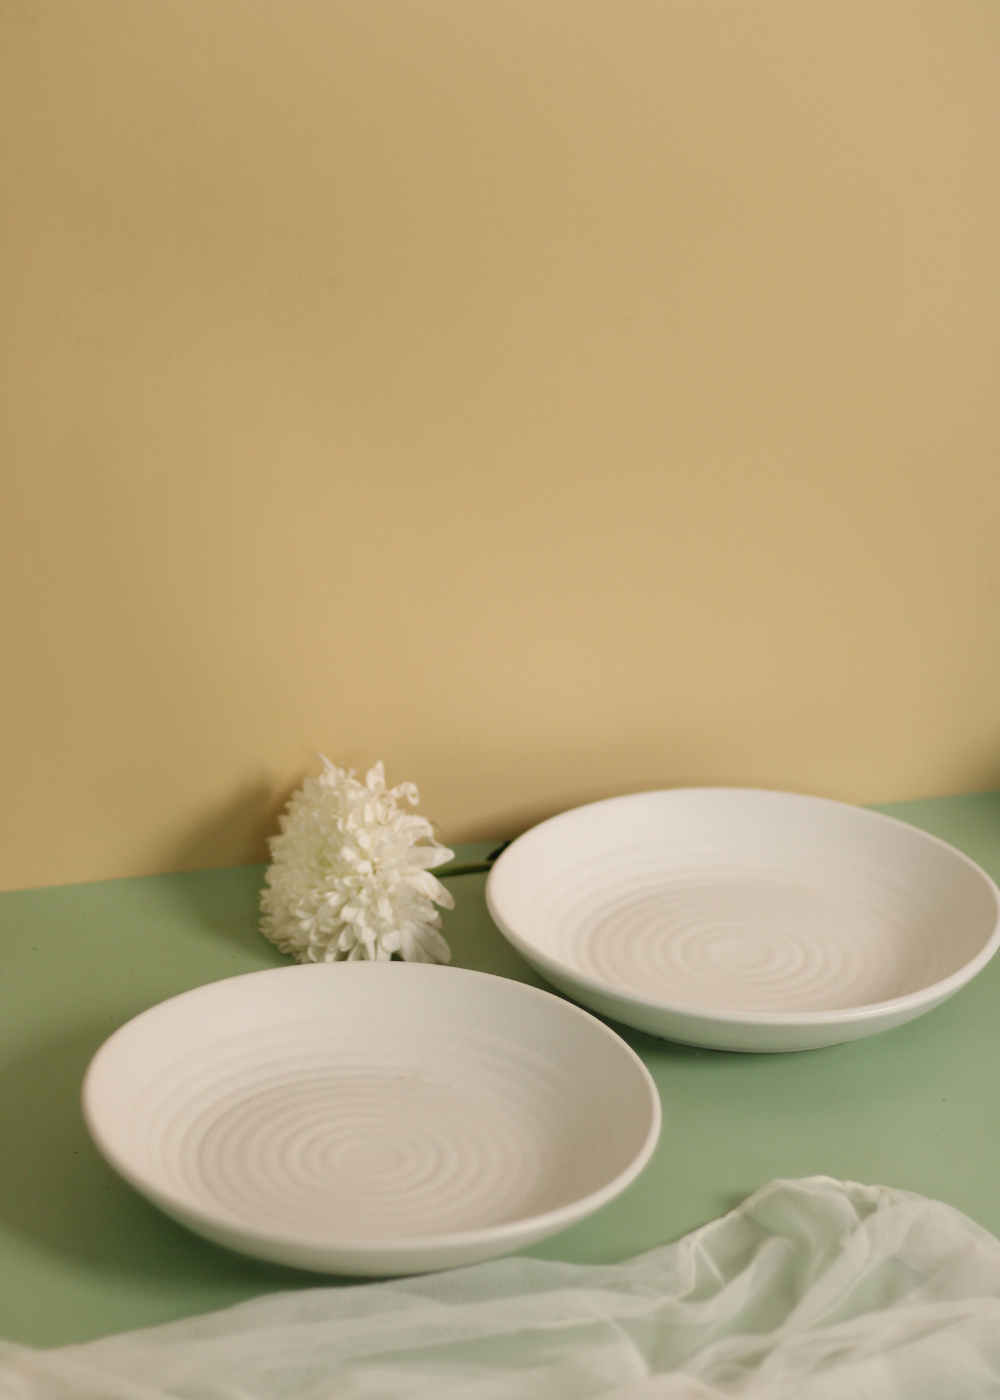 Two pasta plates white color